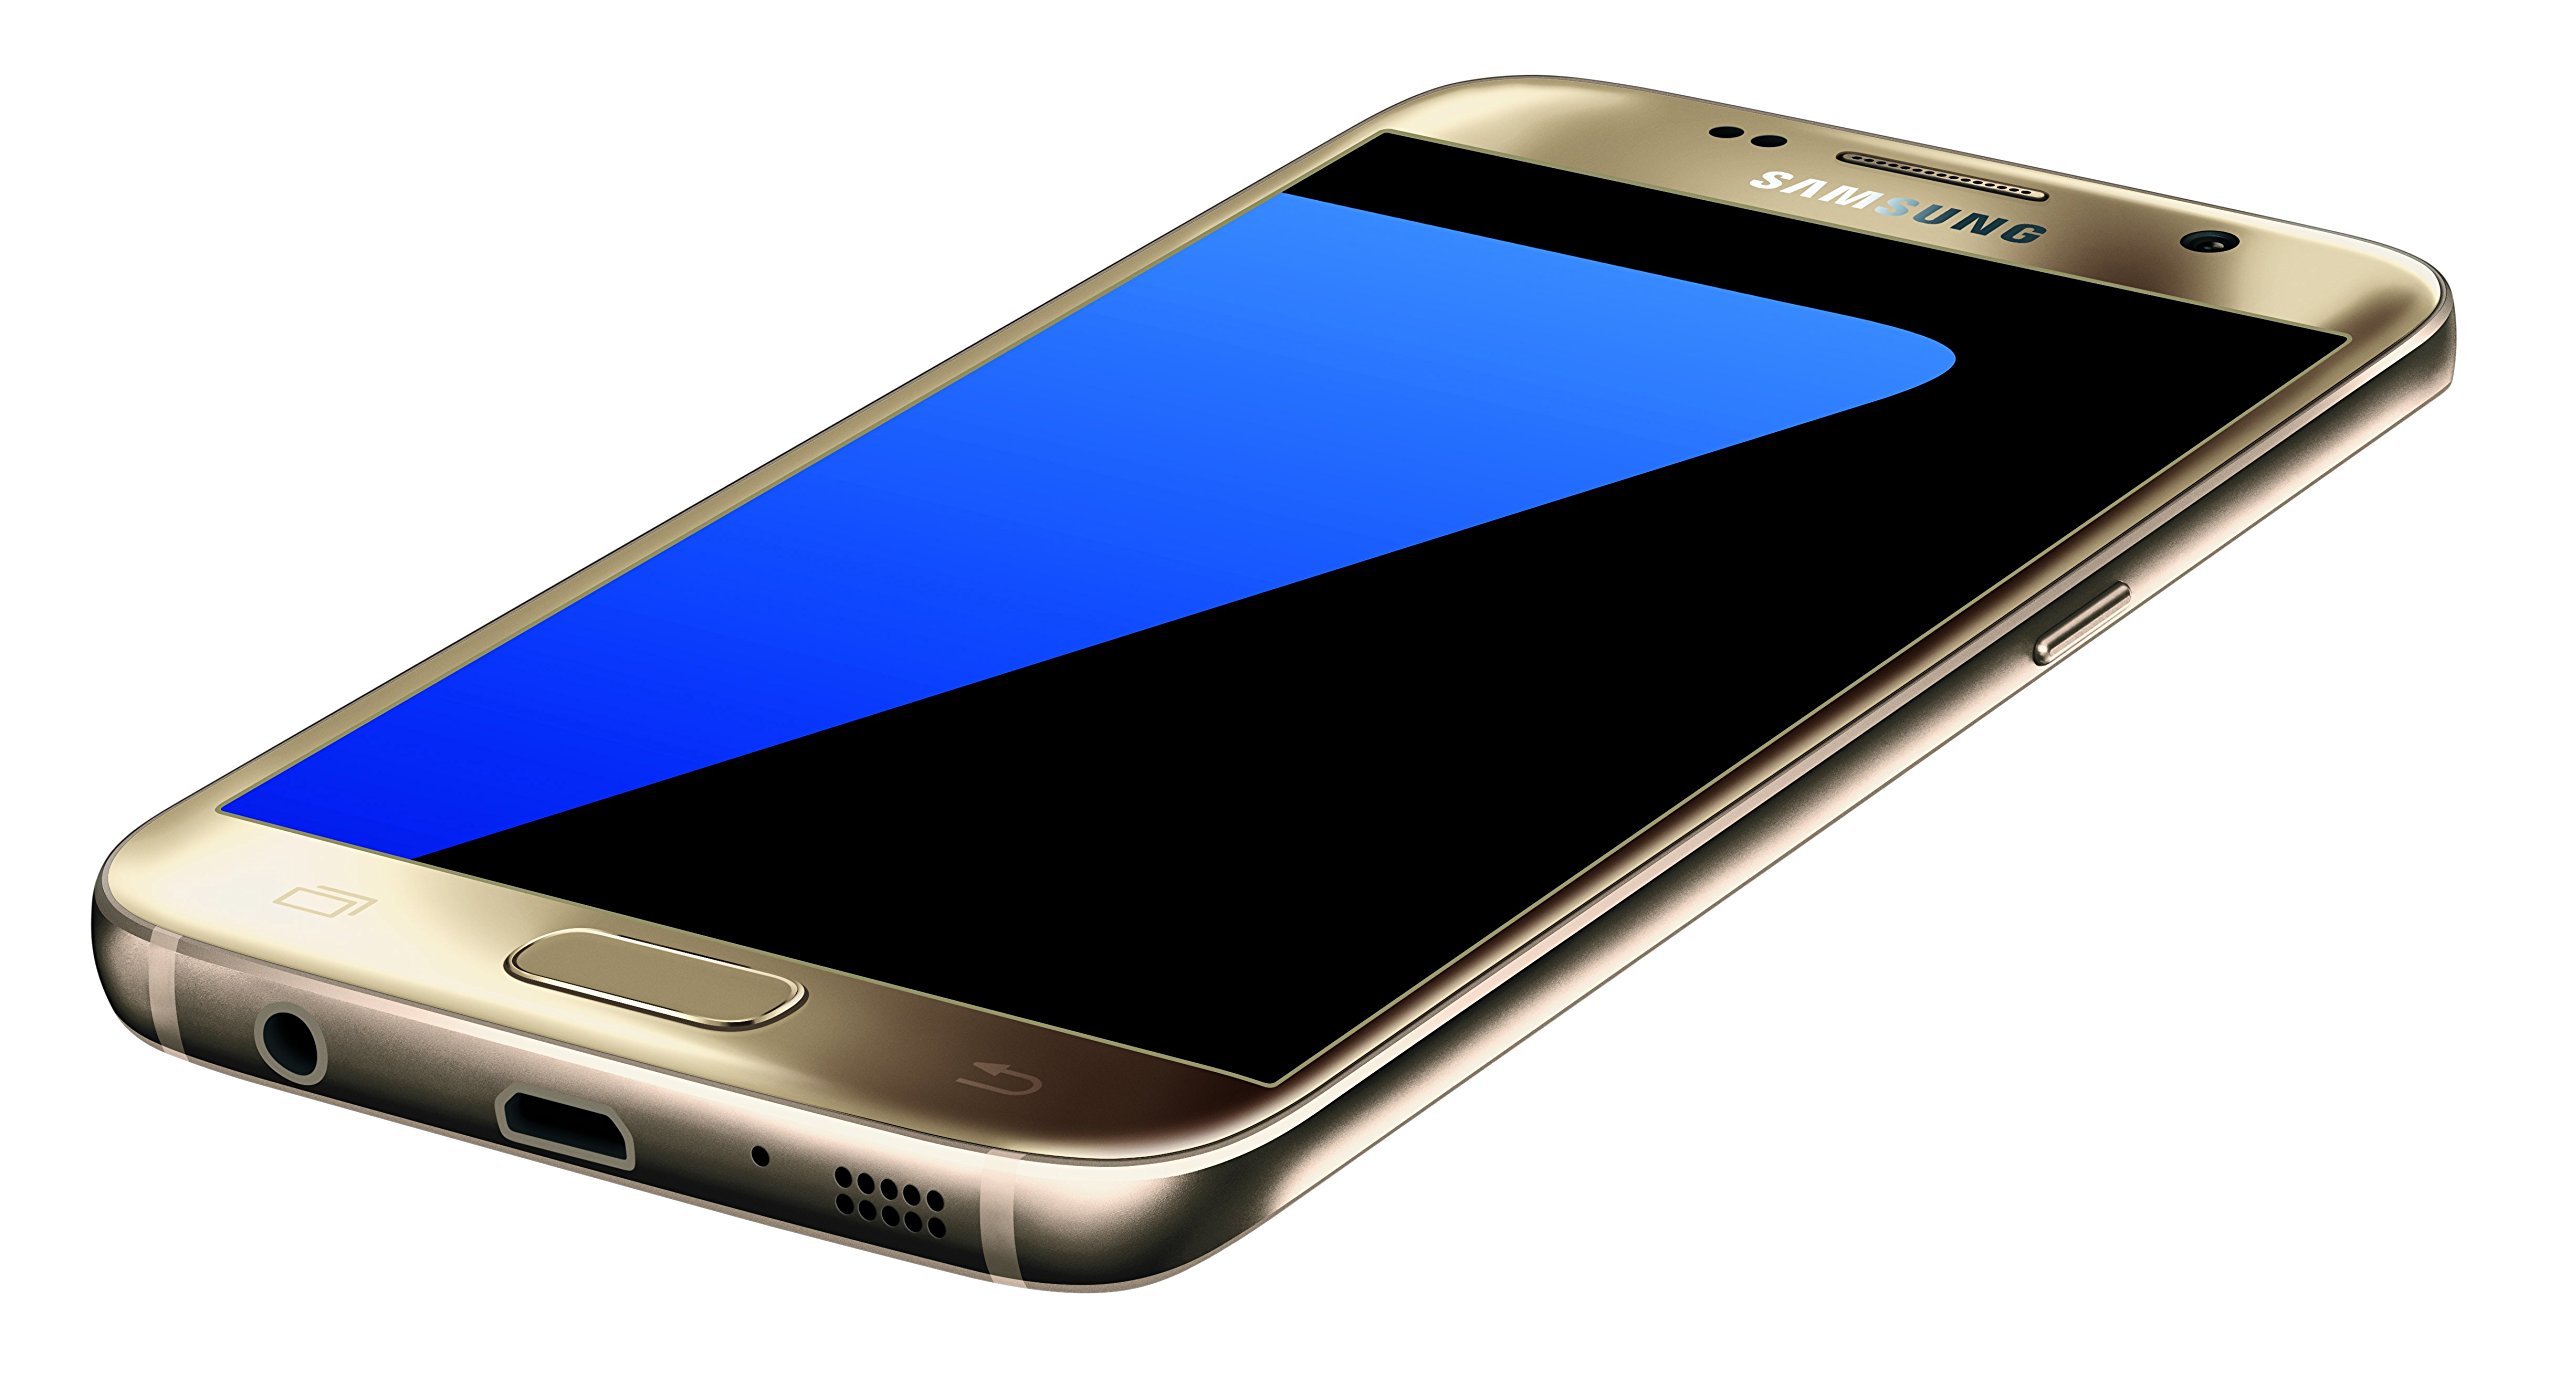 SAMSUNG Galaxy S7 32GB Unlocked (Verizon Wireless) - Gold